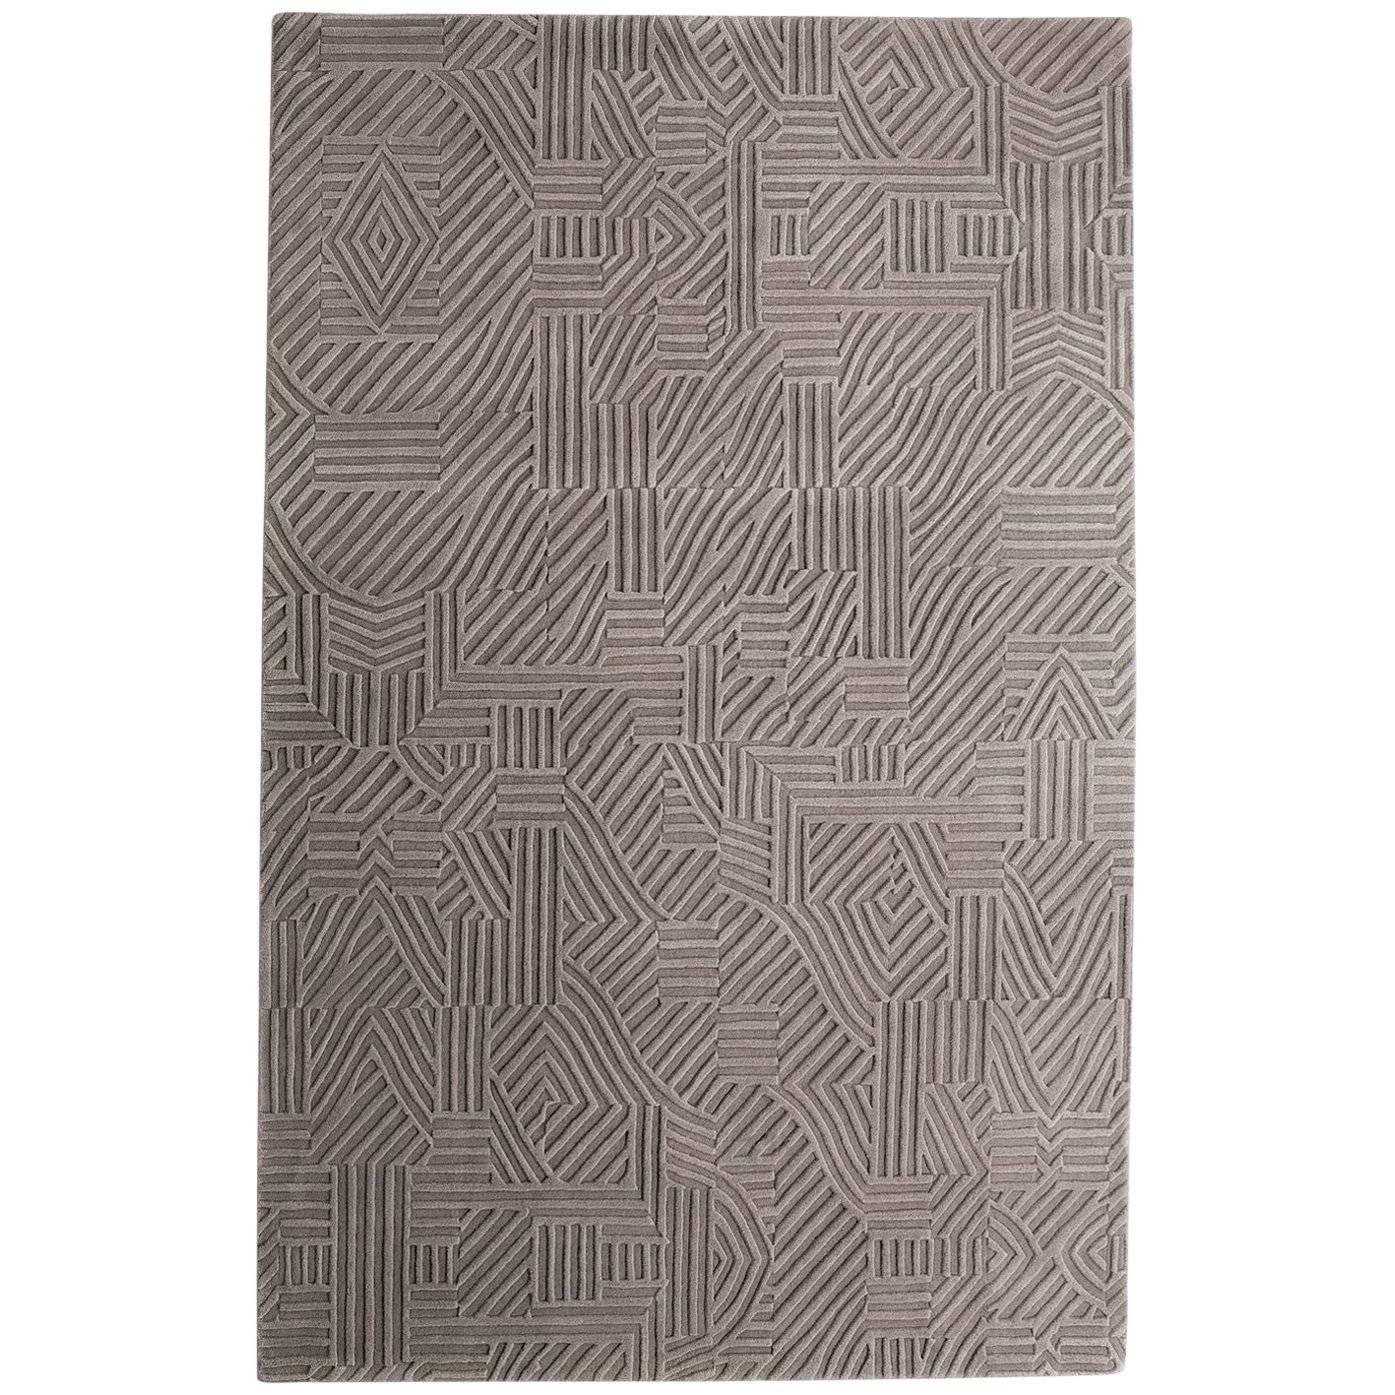 Tapis African Pattern 1 de Milton Glaser, petit en vente